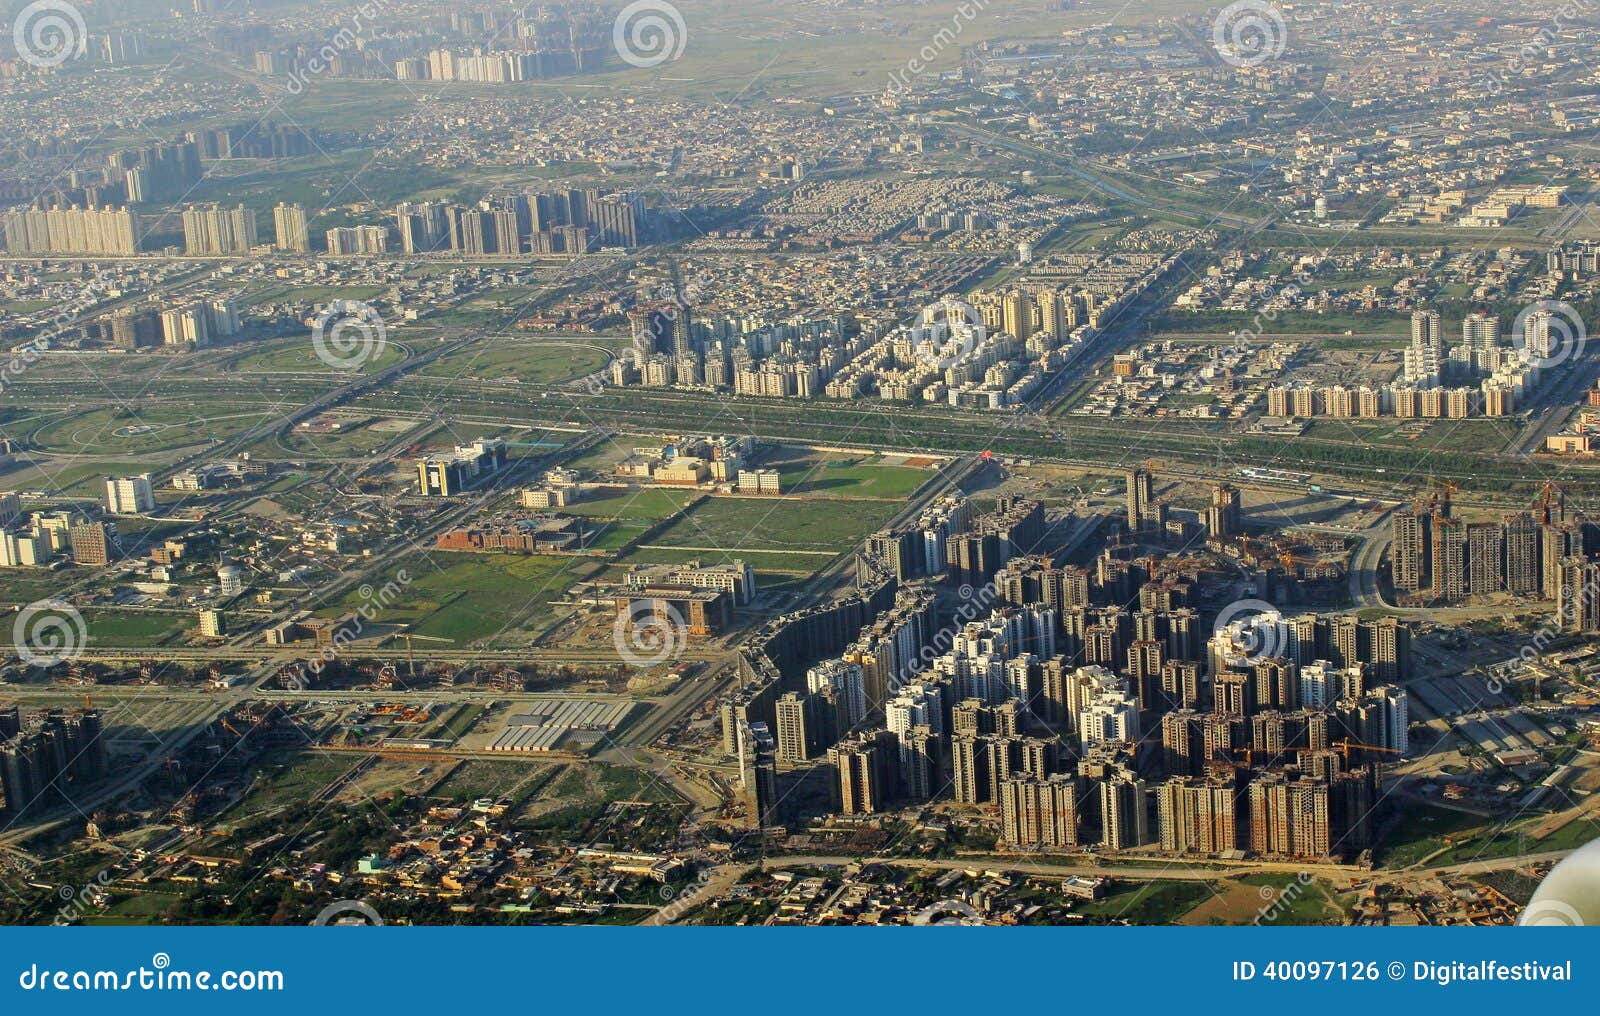 economy-booming-modern-sky-scraper-construction-ne-aerial-view-new-delhi-noida-area-india-depicting-activity-high-rise-40097126.jpg